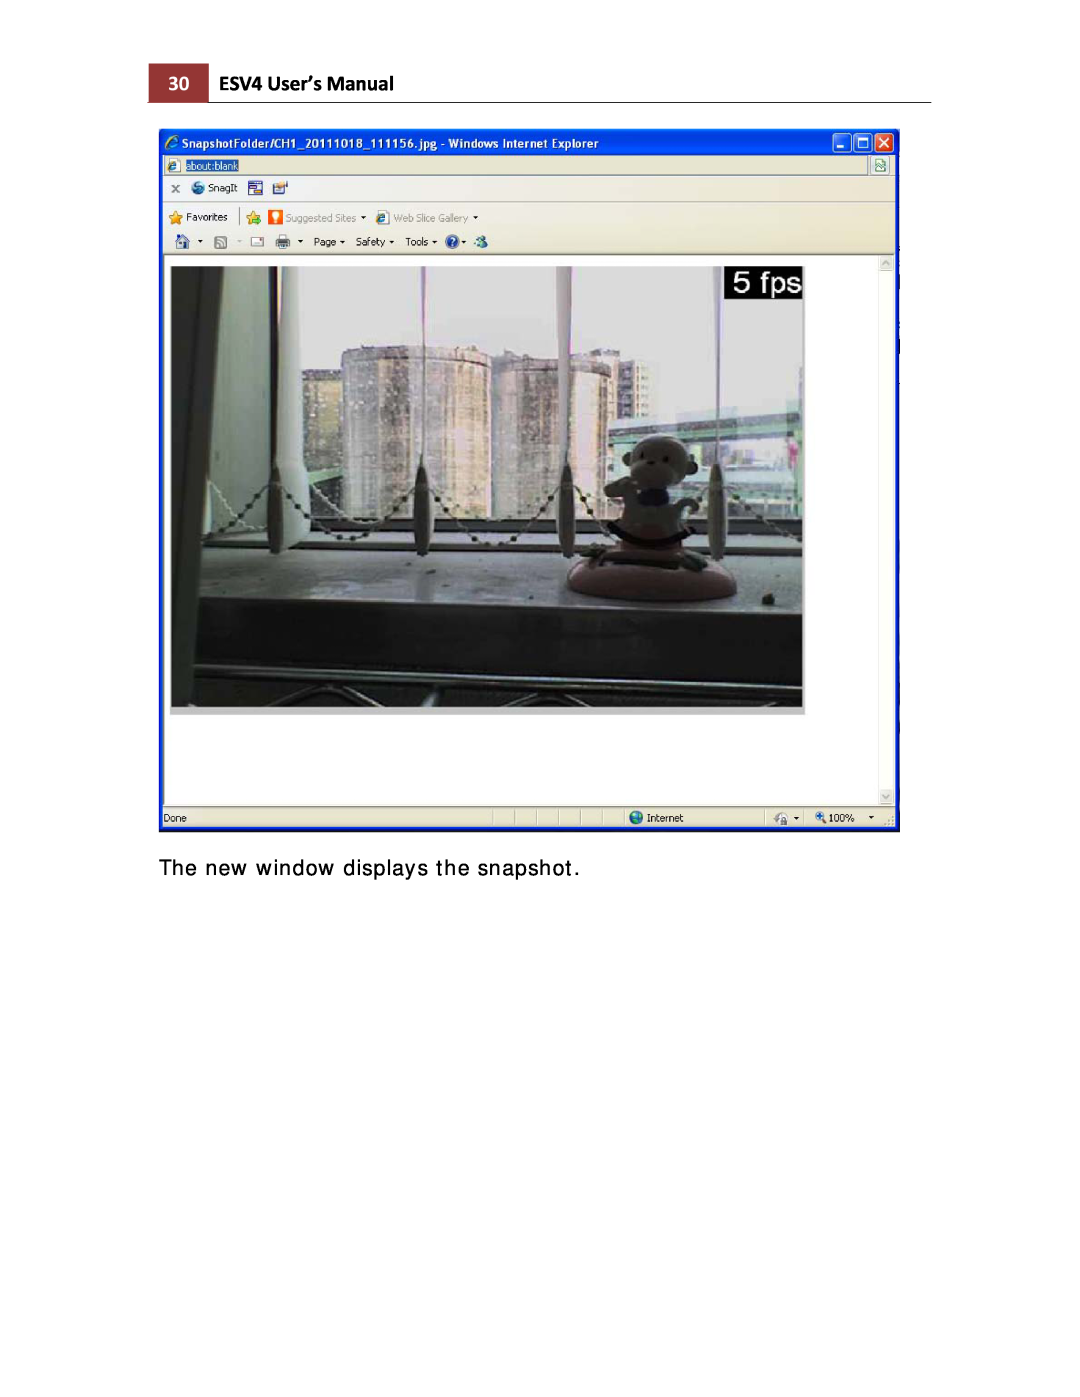 Toshiba ESV41T user manual 30ESV4 User’s Manual, The new window displays the snapshot 